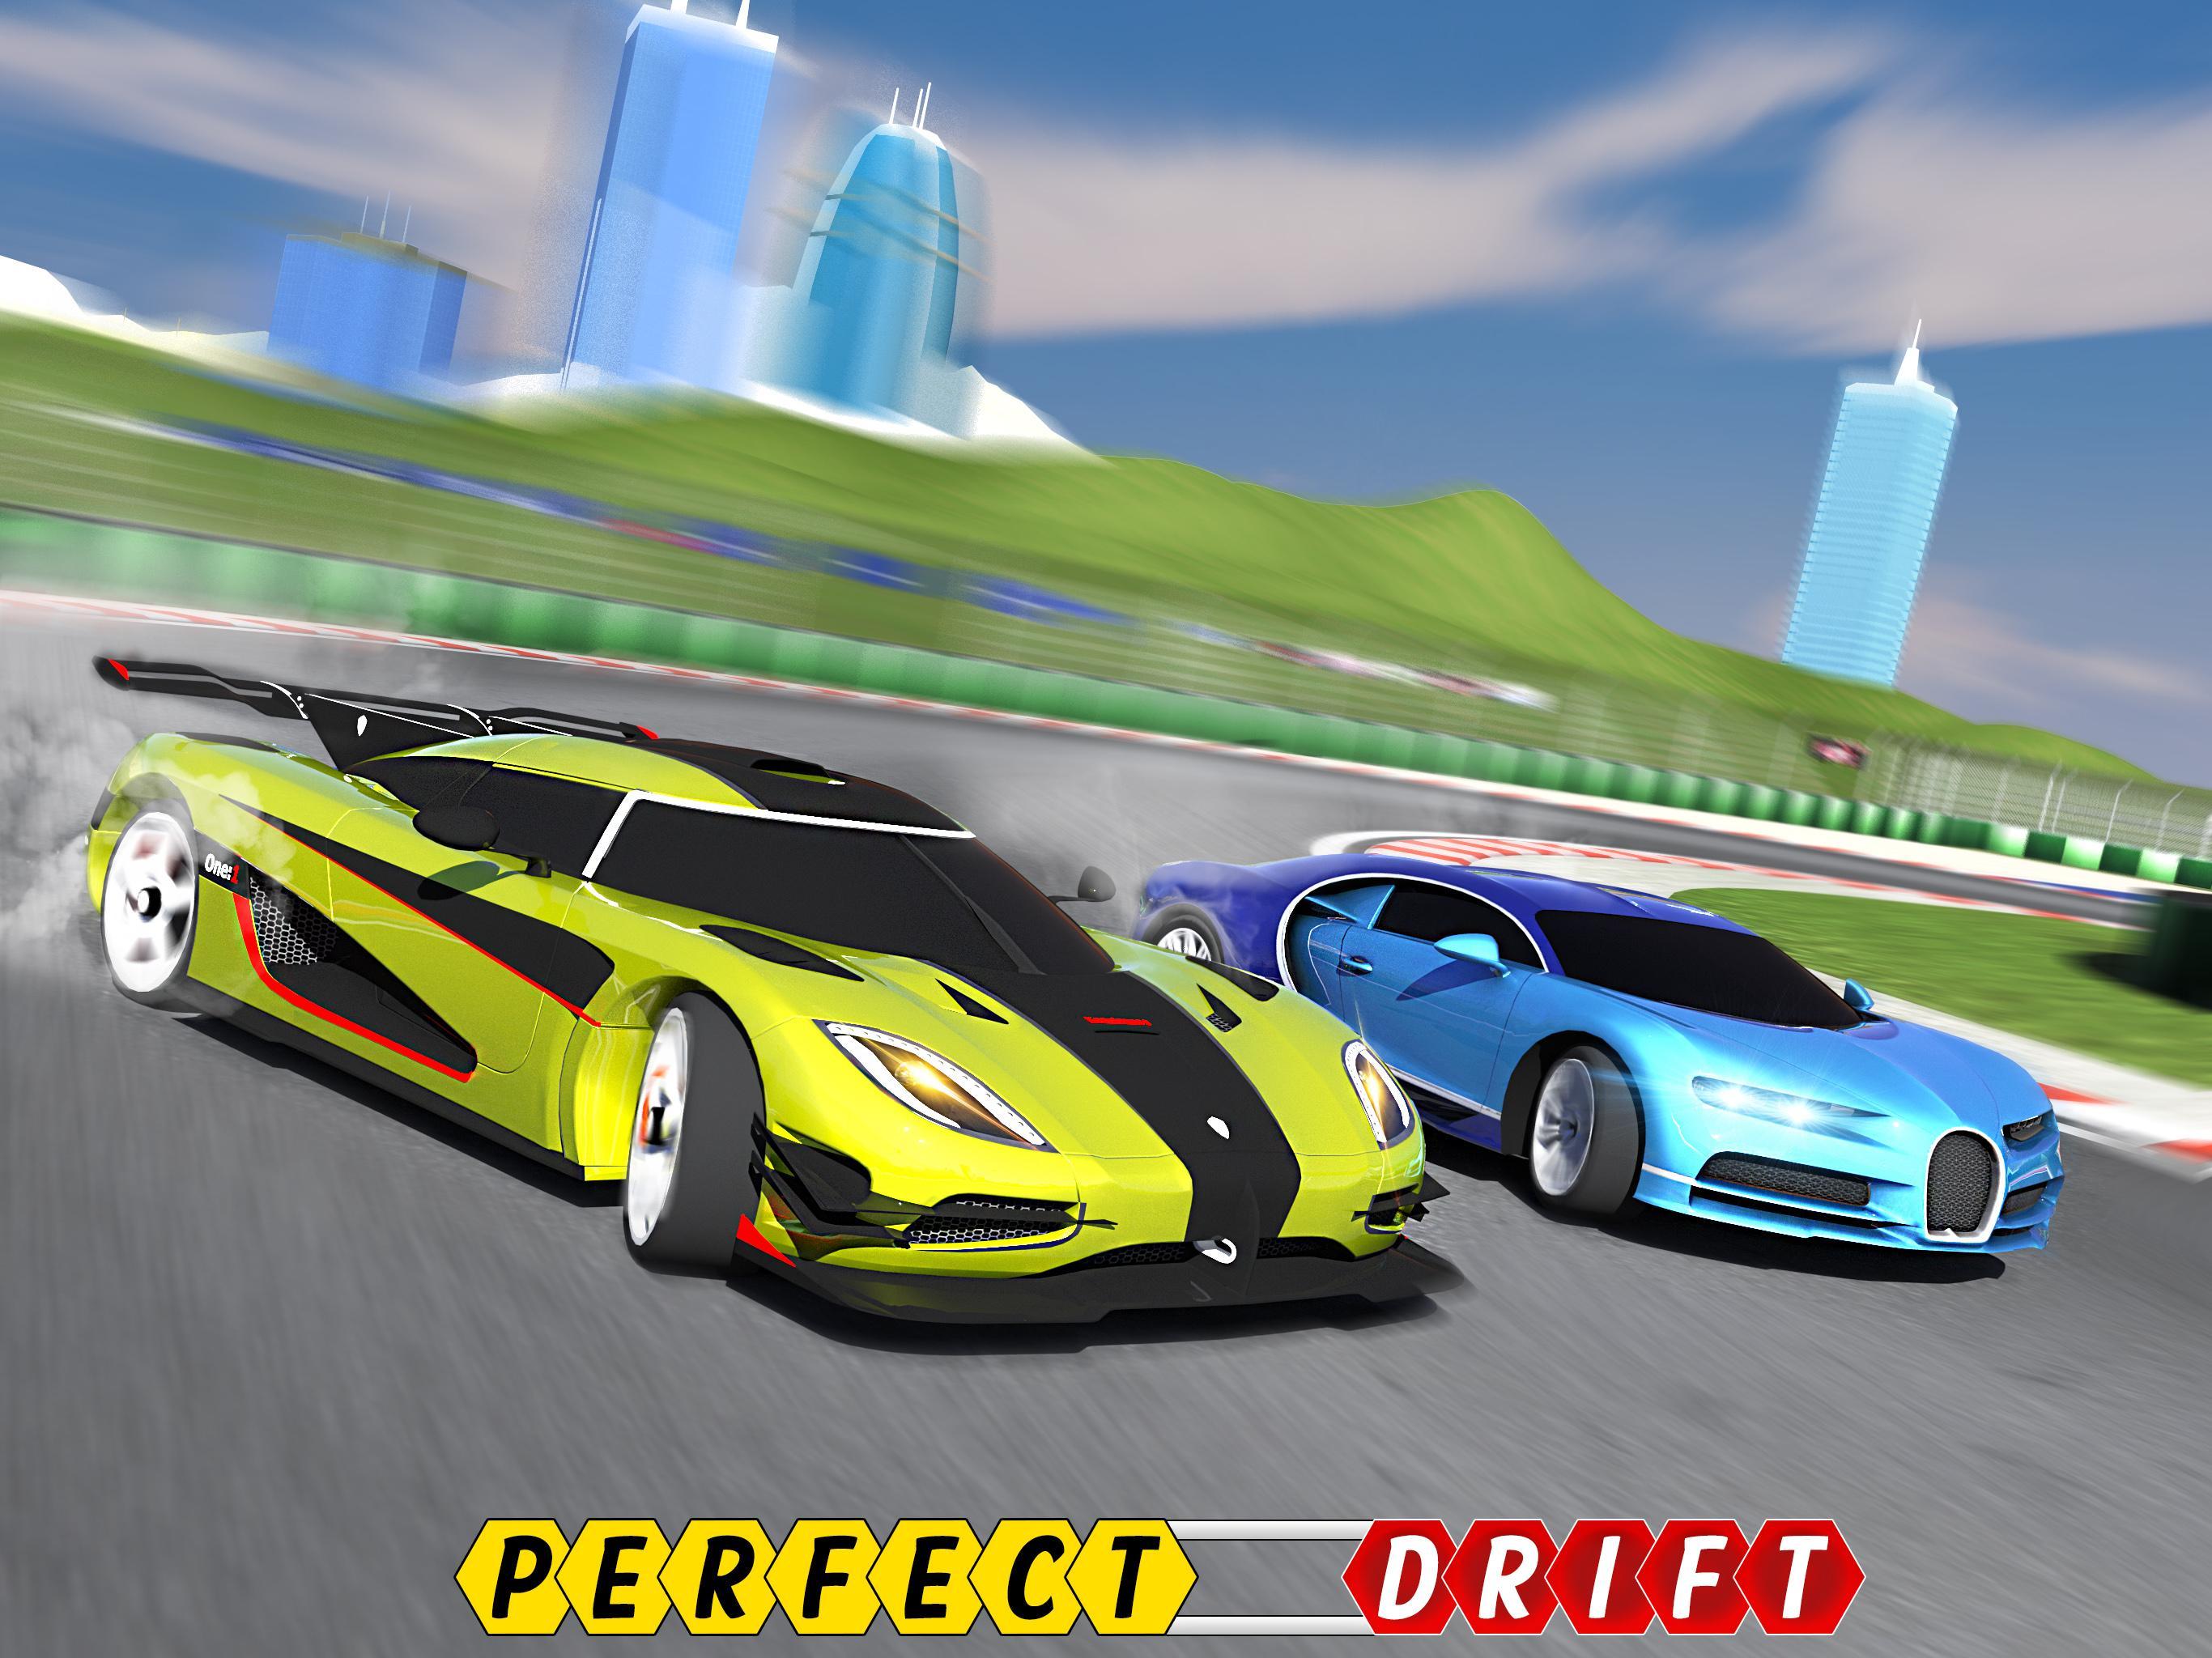 Айринстайл Расинг мастер. Car game Android. Race Master 3d car Racing. Racing games 2022 mobile UI.